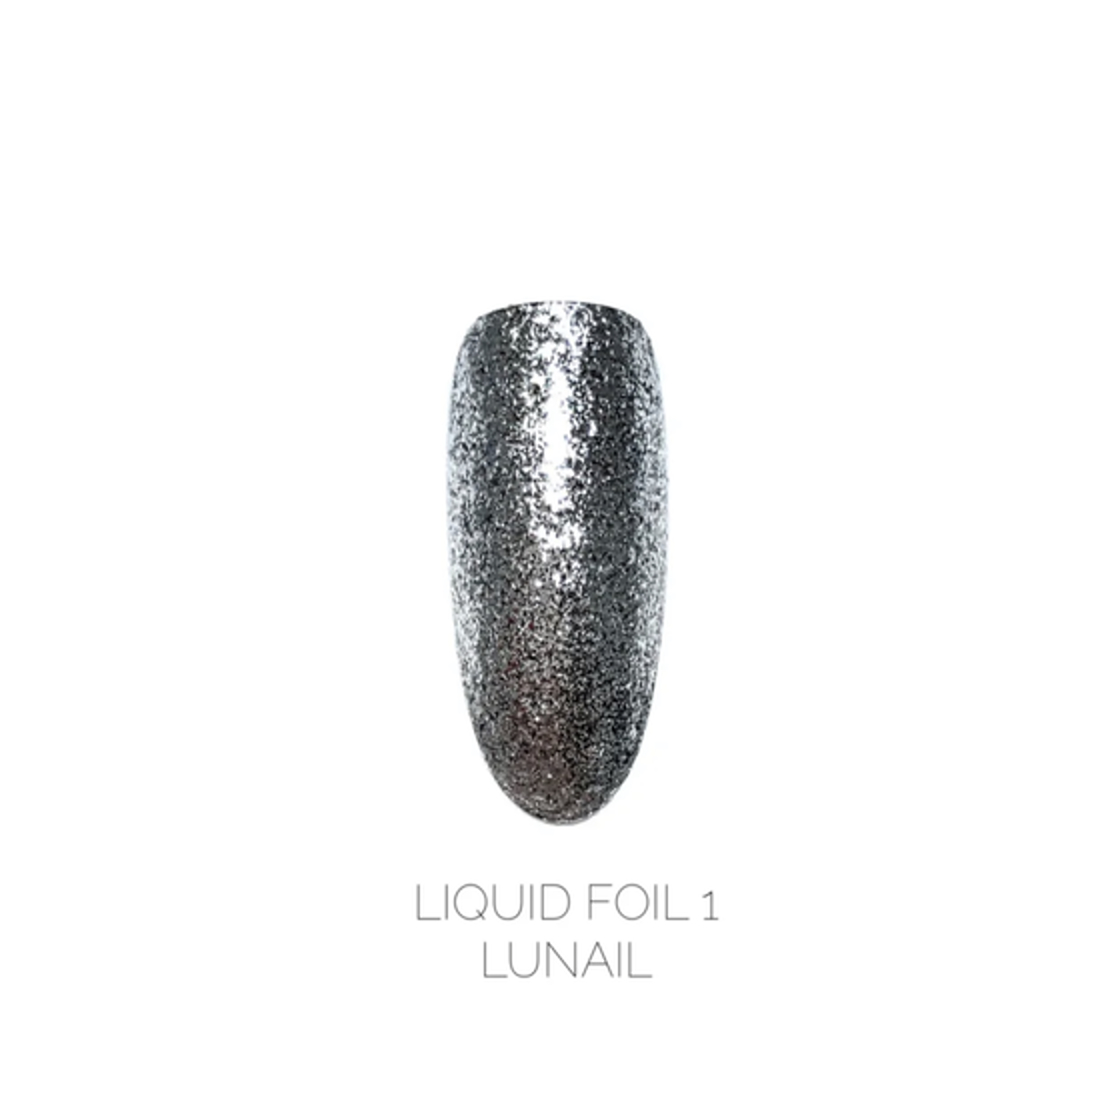 Liquid foil lunail